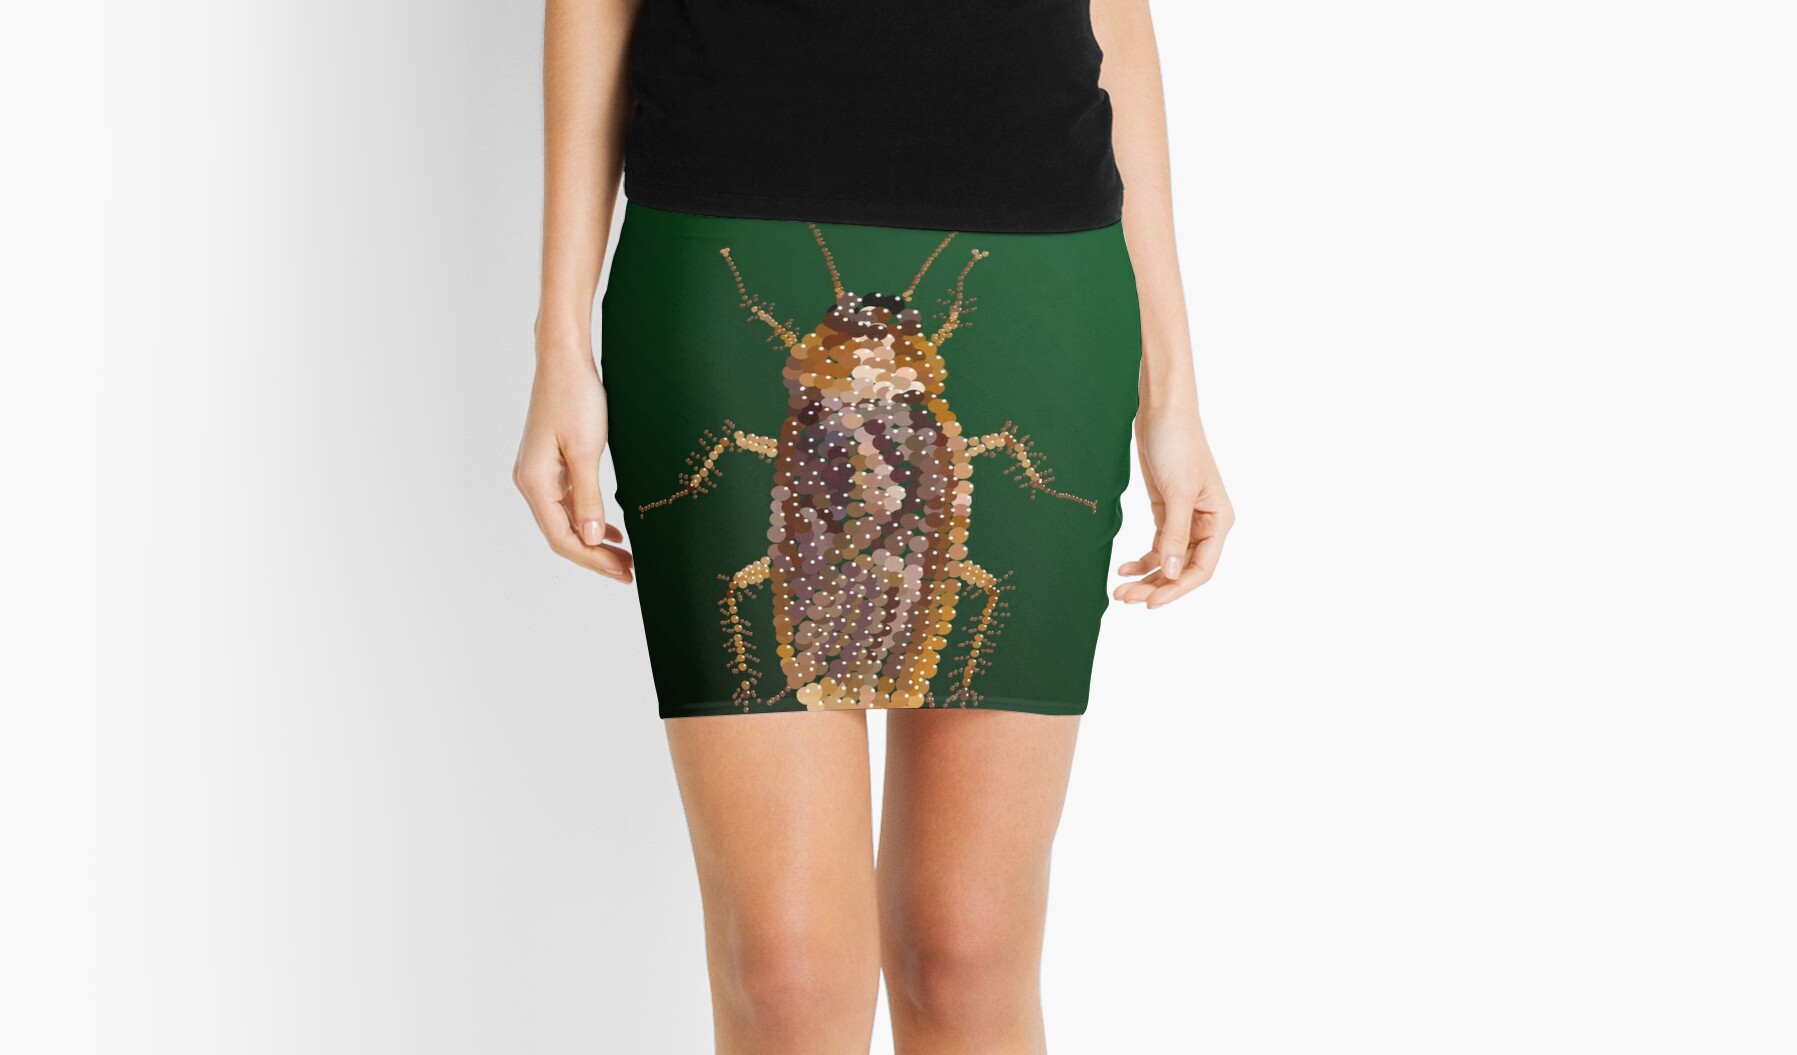 cockroach simulator up skirt